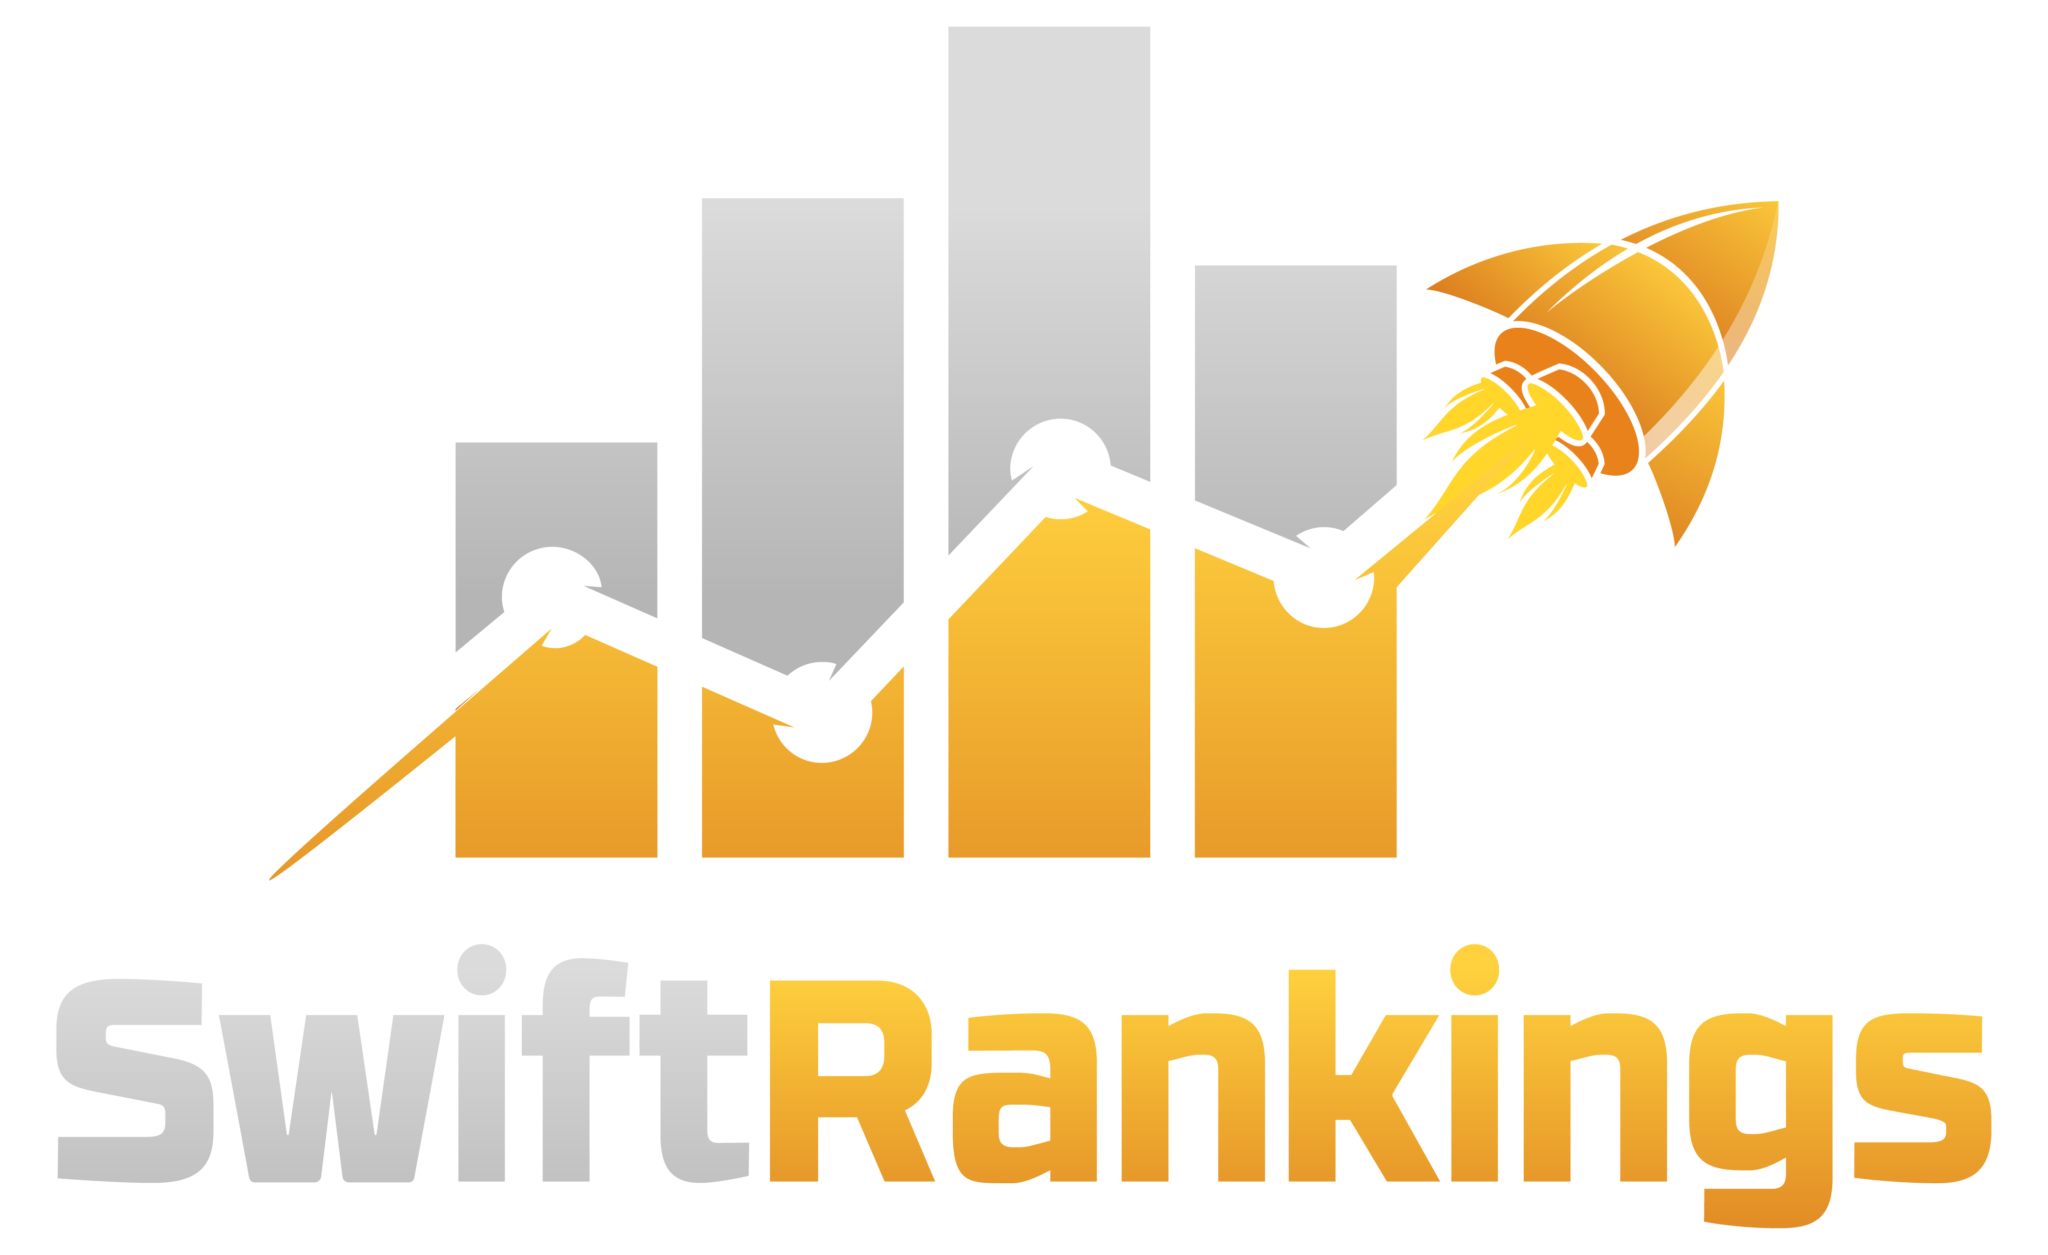 Swift Rankings LLC